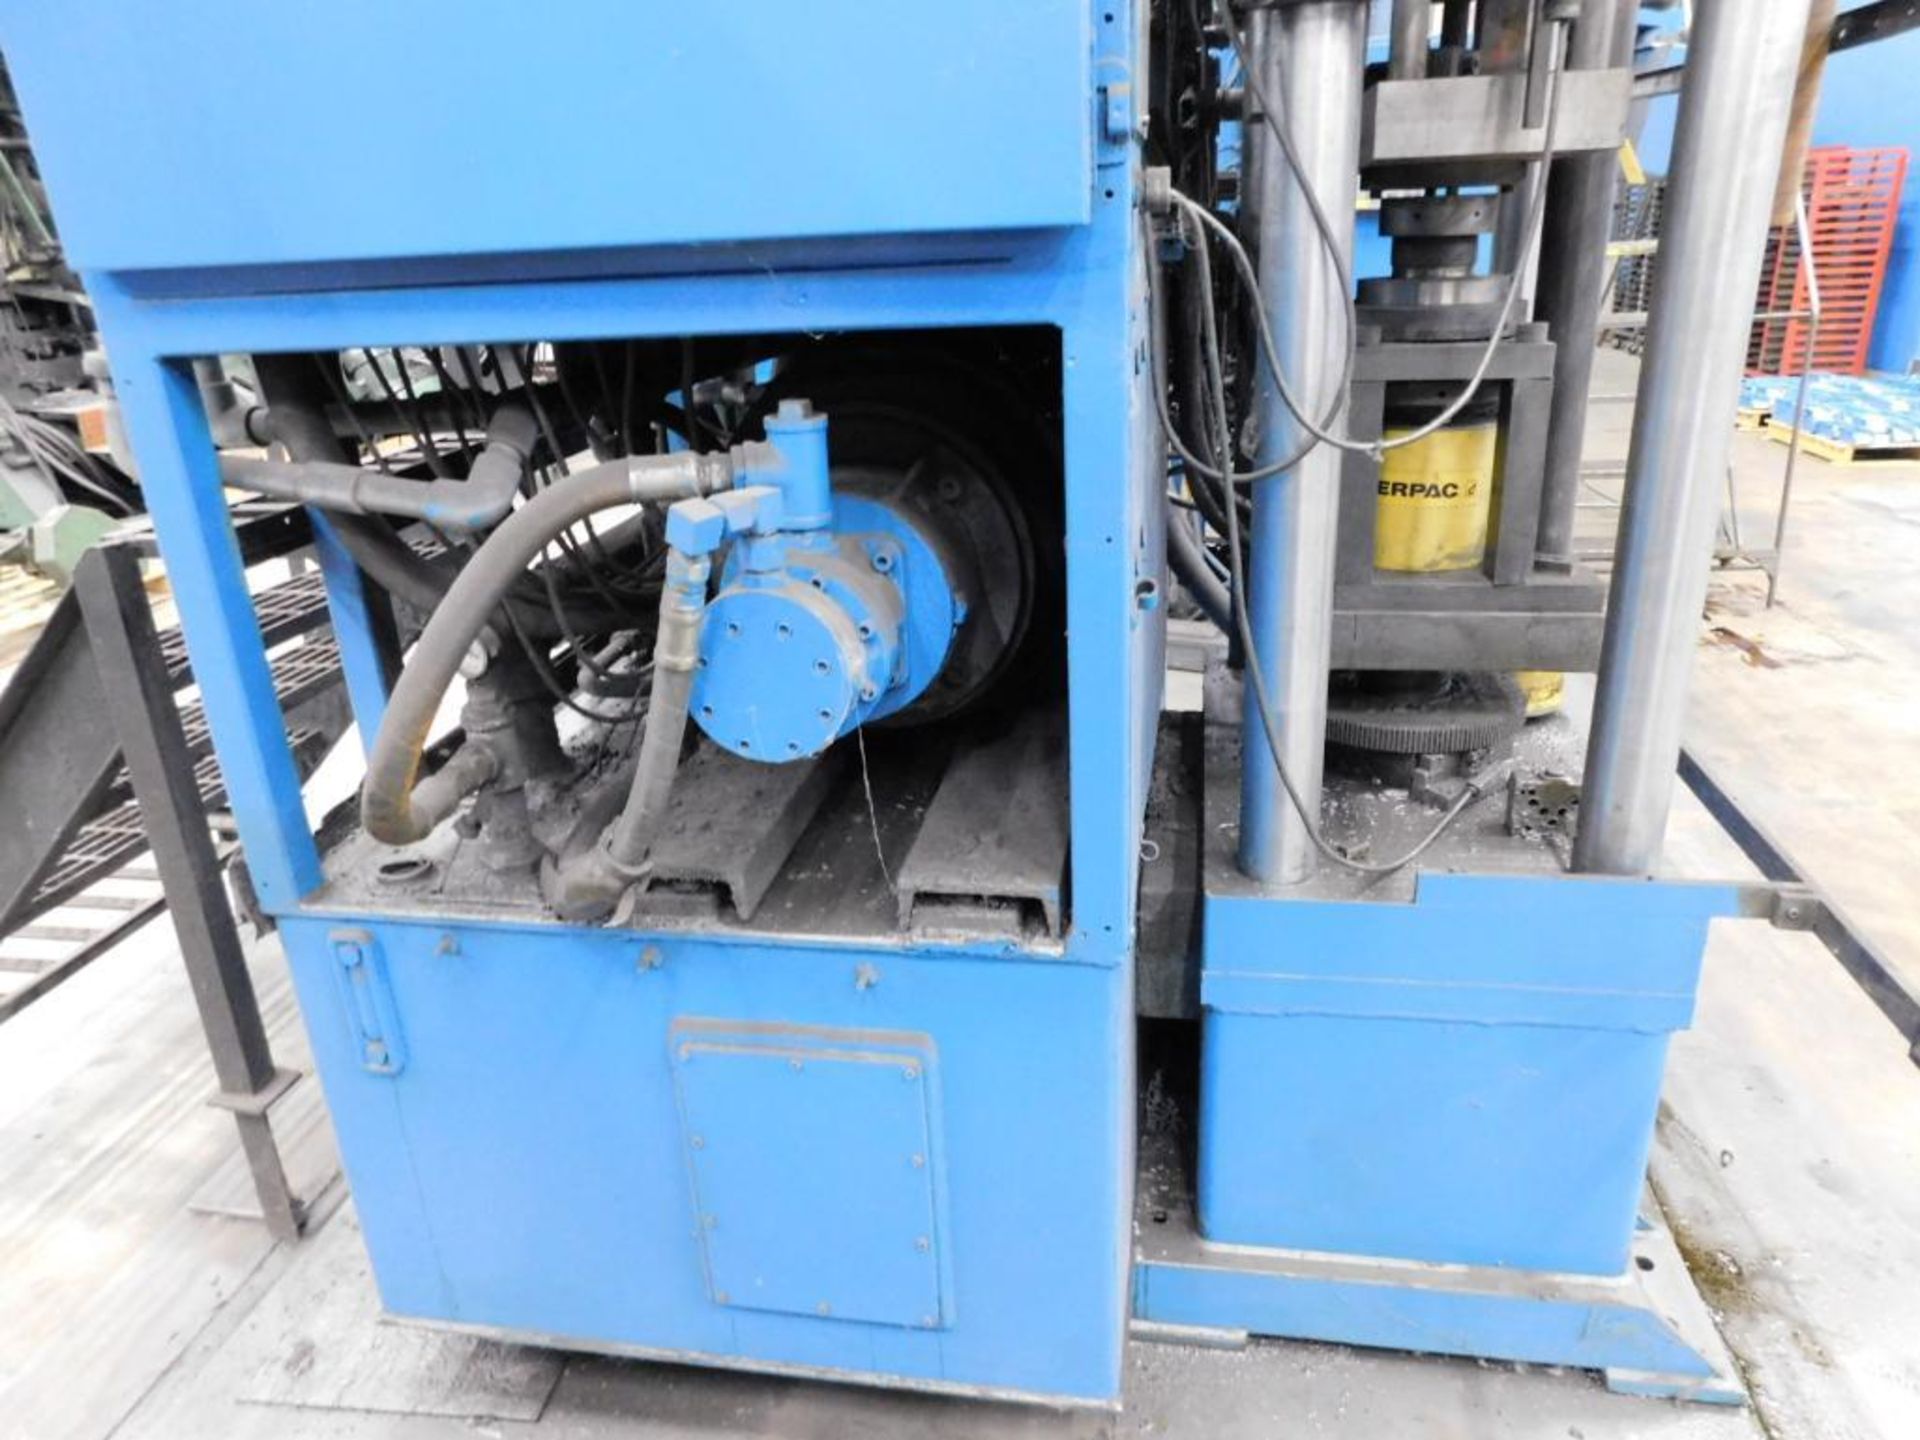 Hydramet Powder Compacting Press, Hydraulic, Model HC-60, 60 Ton Maximum Pressing Force, 5" Maximum - Image 15 of 21